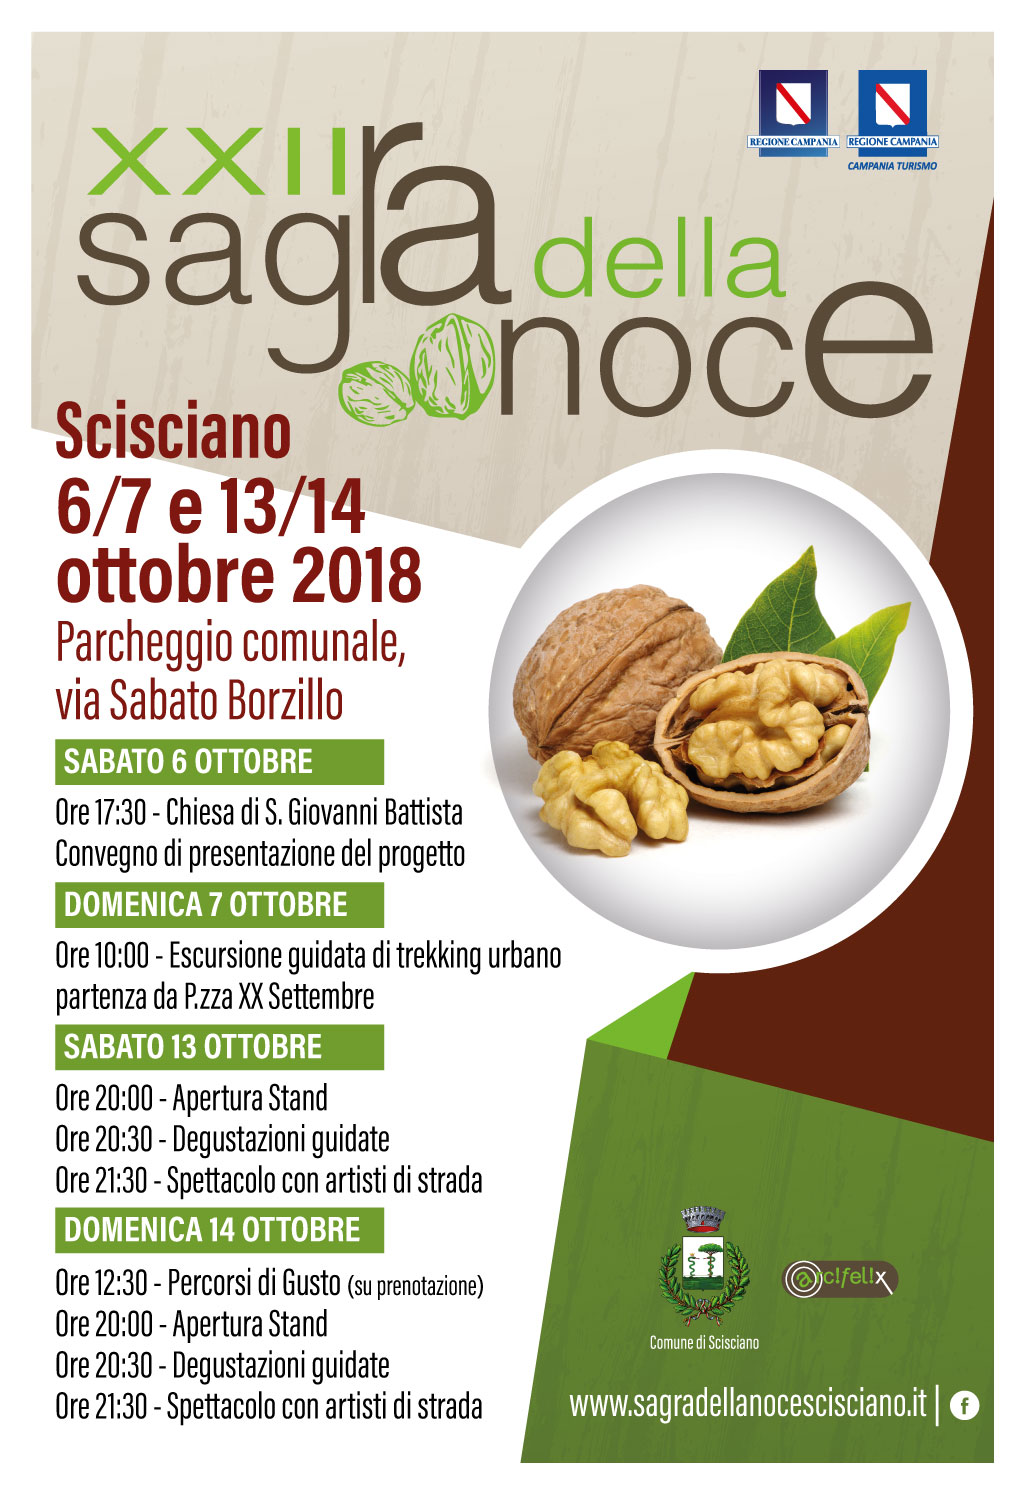 https://www.zerottounonews.it/wp-content/uploads/2018/10/Locandina-XXII-Sagra-della-Noce-di-Scisciano.jpg